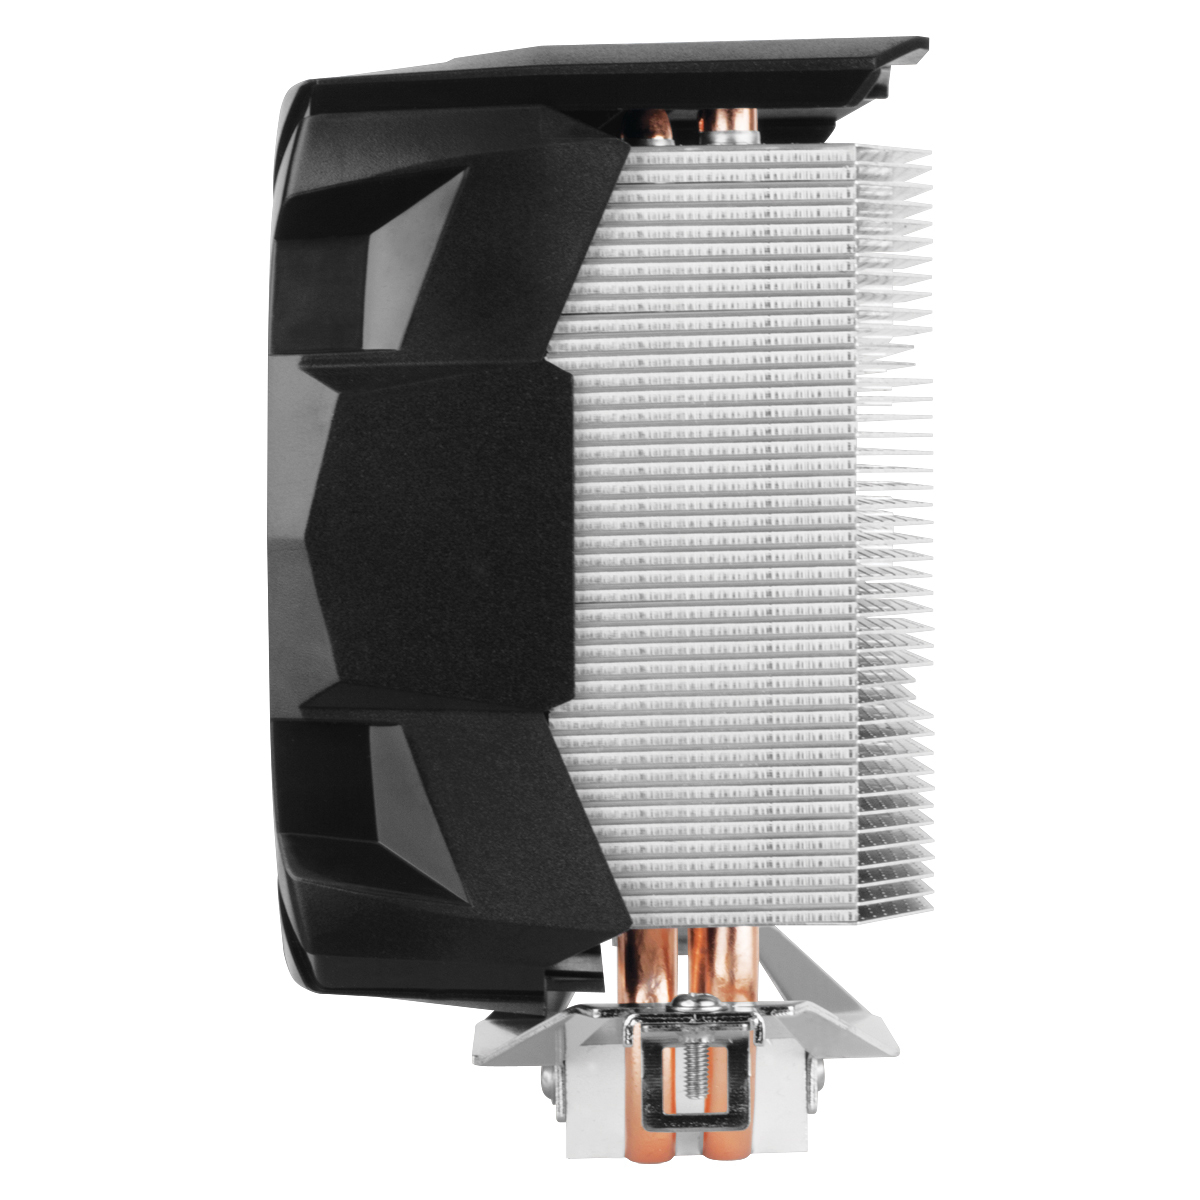 ARCTIC Freezer 7 X Aluminium, black mm) 92 Kühlung, (Tower-Kühler, CPU-Luftkühler